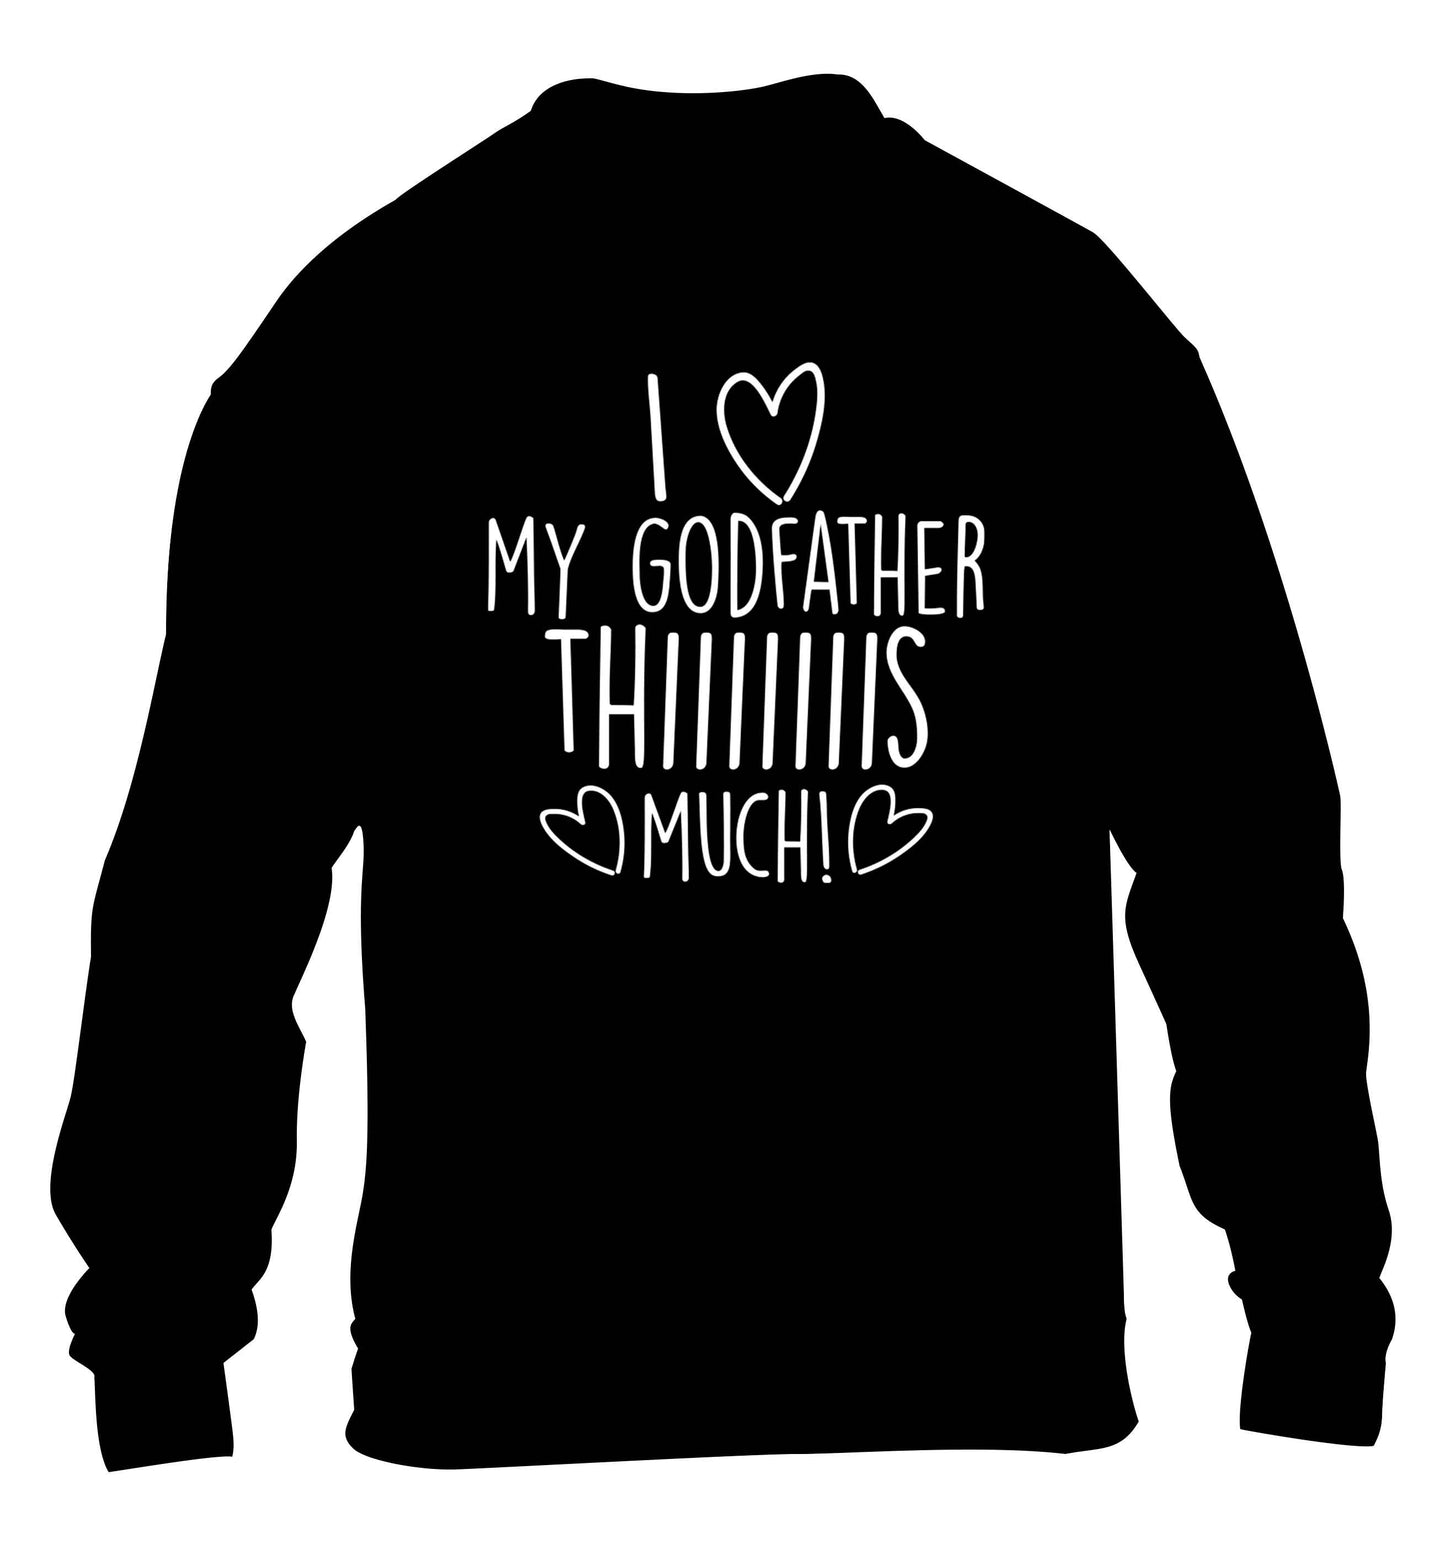 I love my Godfather this much children's black sweater 12-13 Years